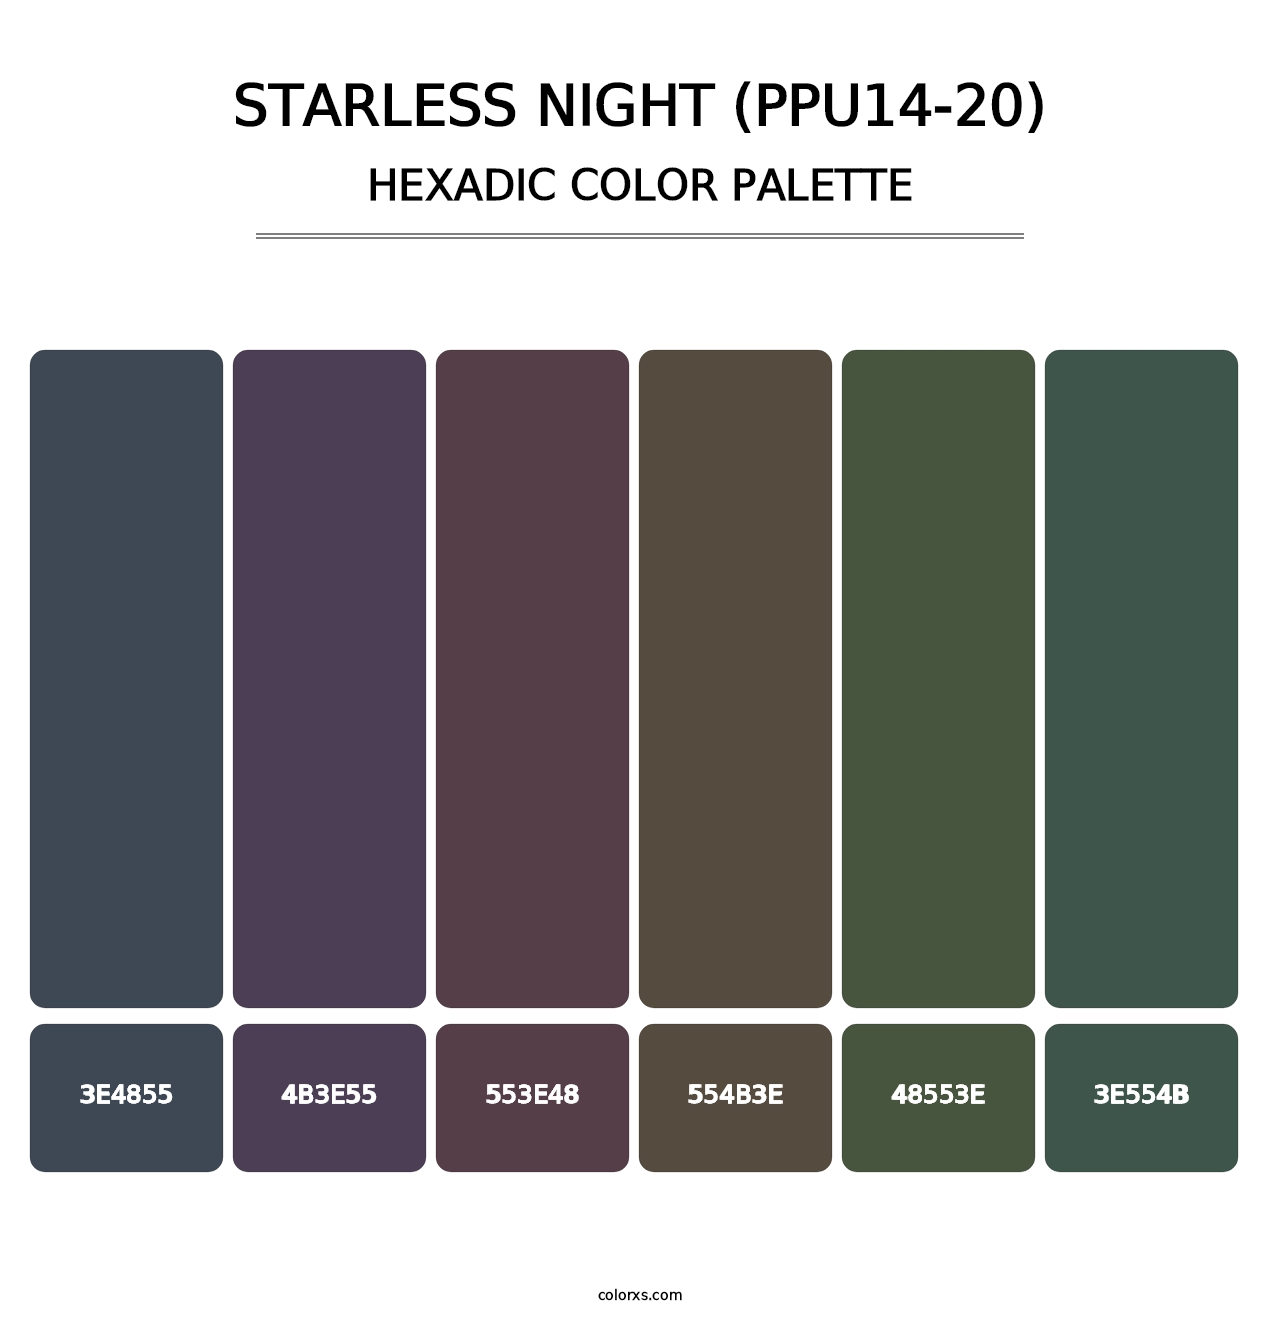 Starless Night (PPU14-20) - Hexadic Color Palette